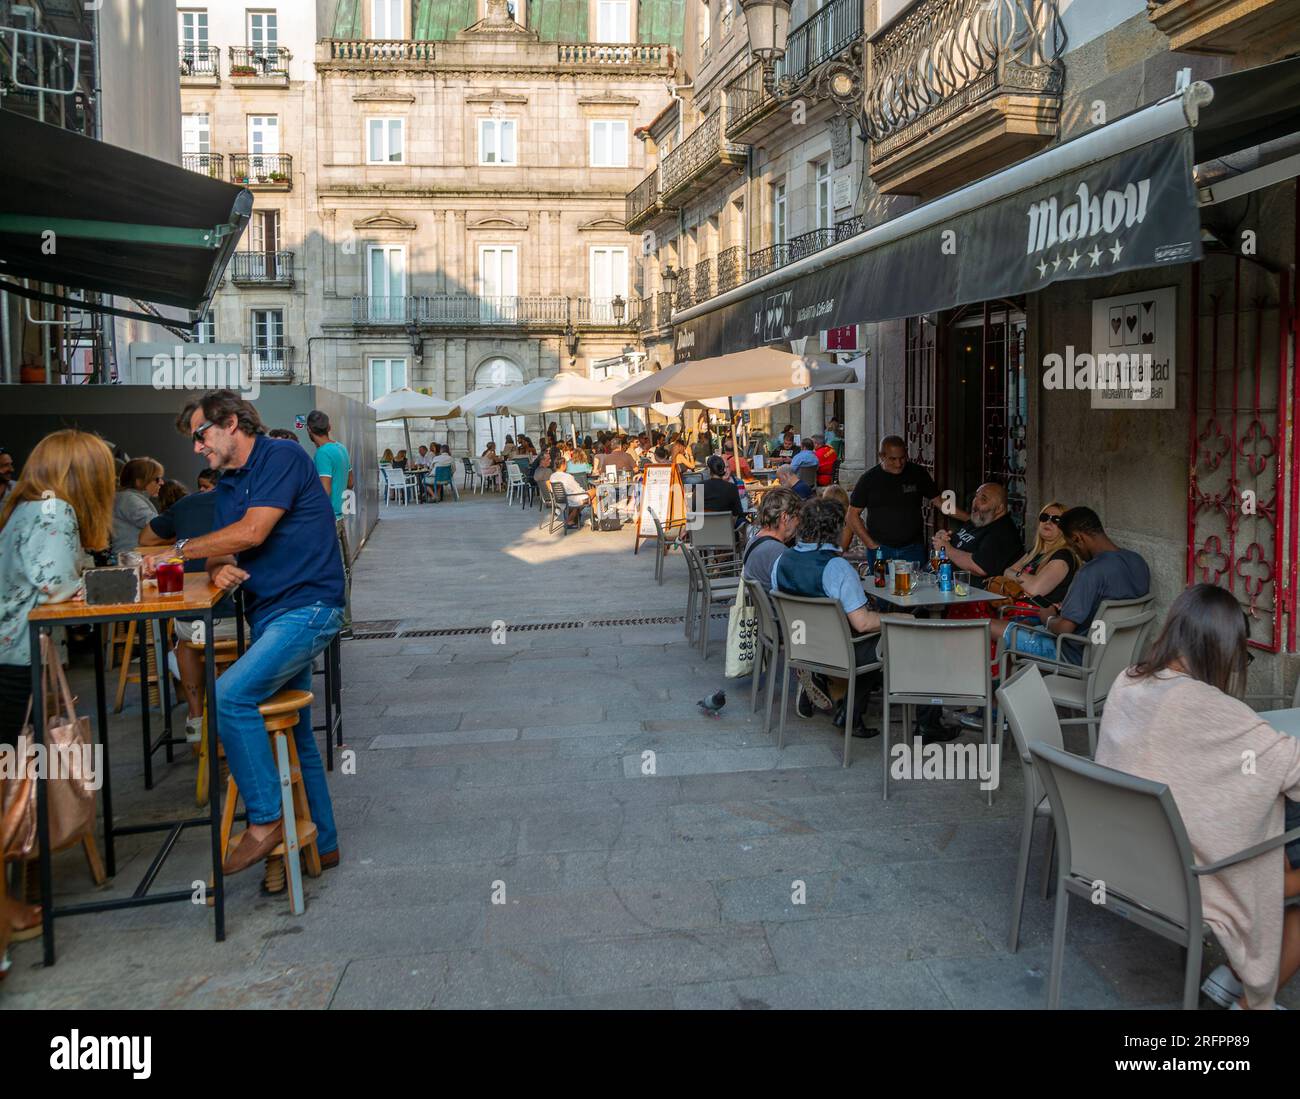 People and street cafes bars, near Plaza de la Constitucion square, old town city centre of Vigo, Galicia, Spain Stock Photo